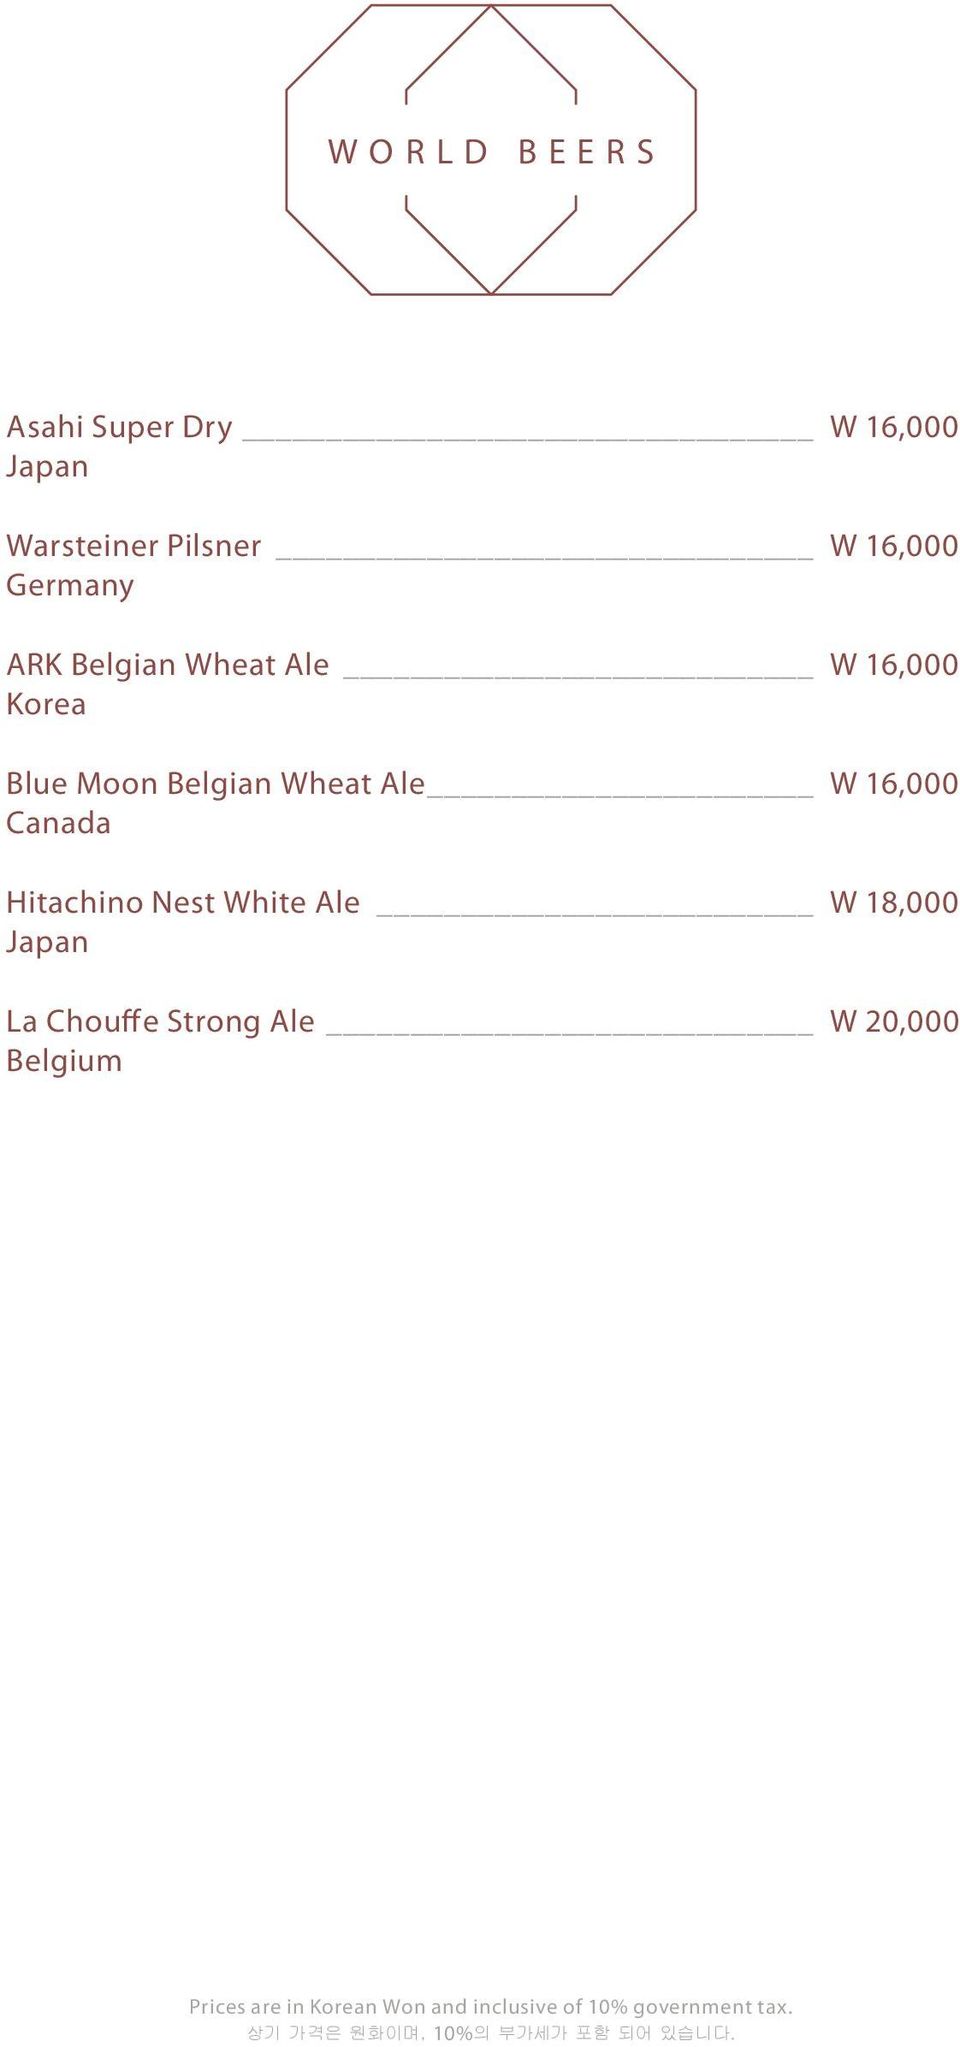 Korea Blue Moon Belgian Wheat Ale W 16,000 Canada Hitachino